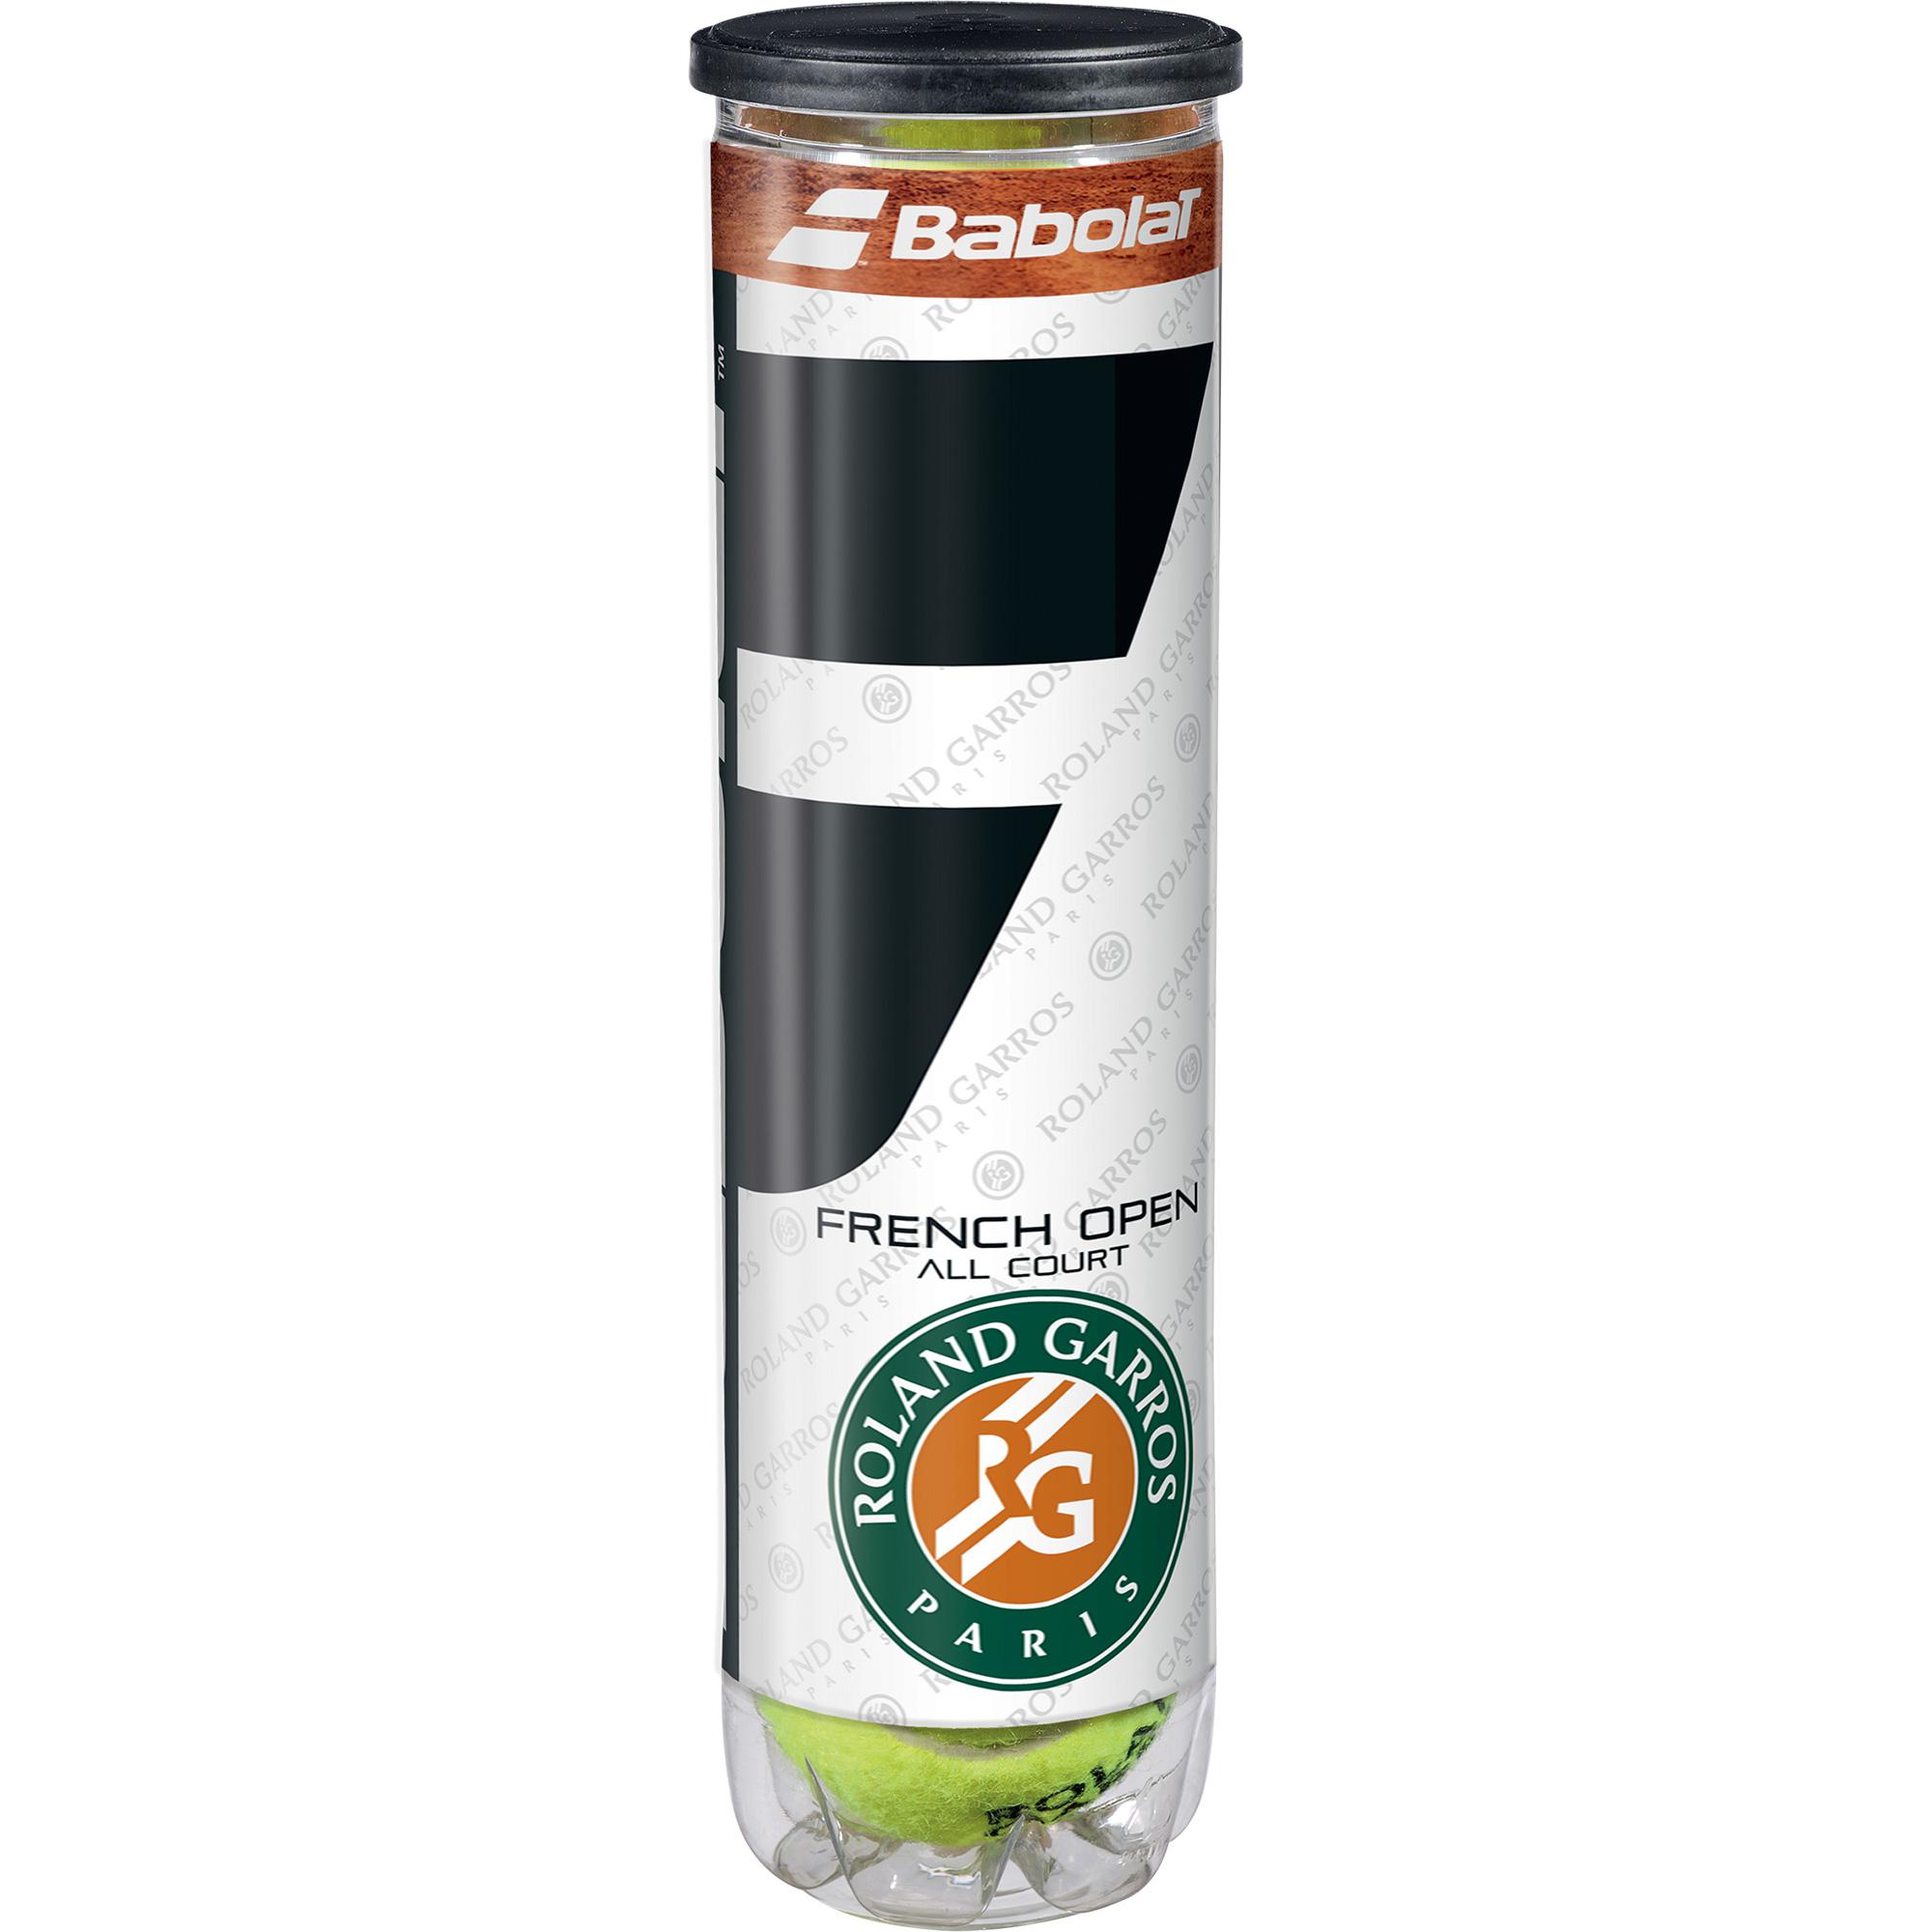 Details about   Babolat Unisex Roland Garros All Court Tennis Balls 